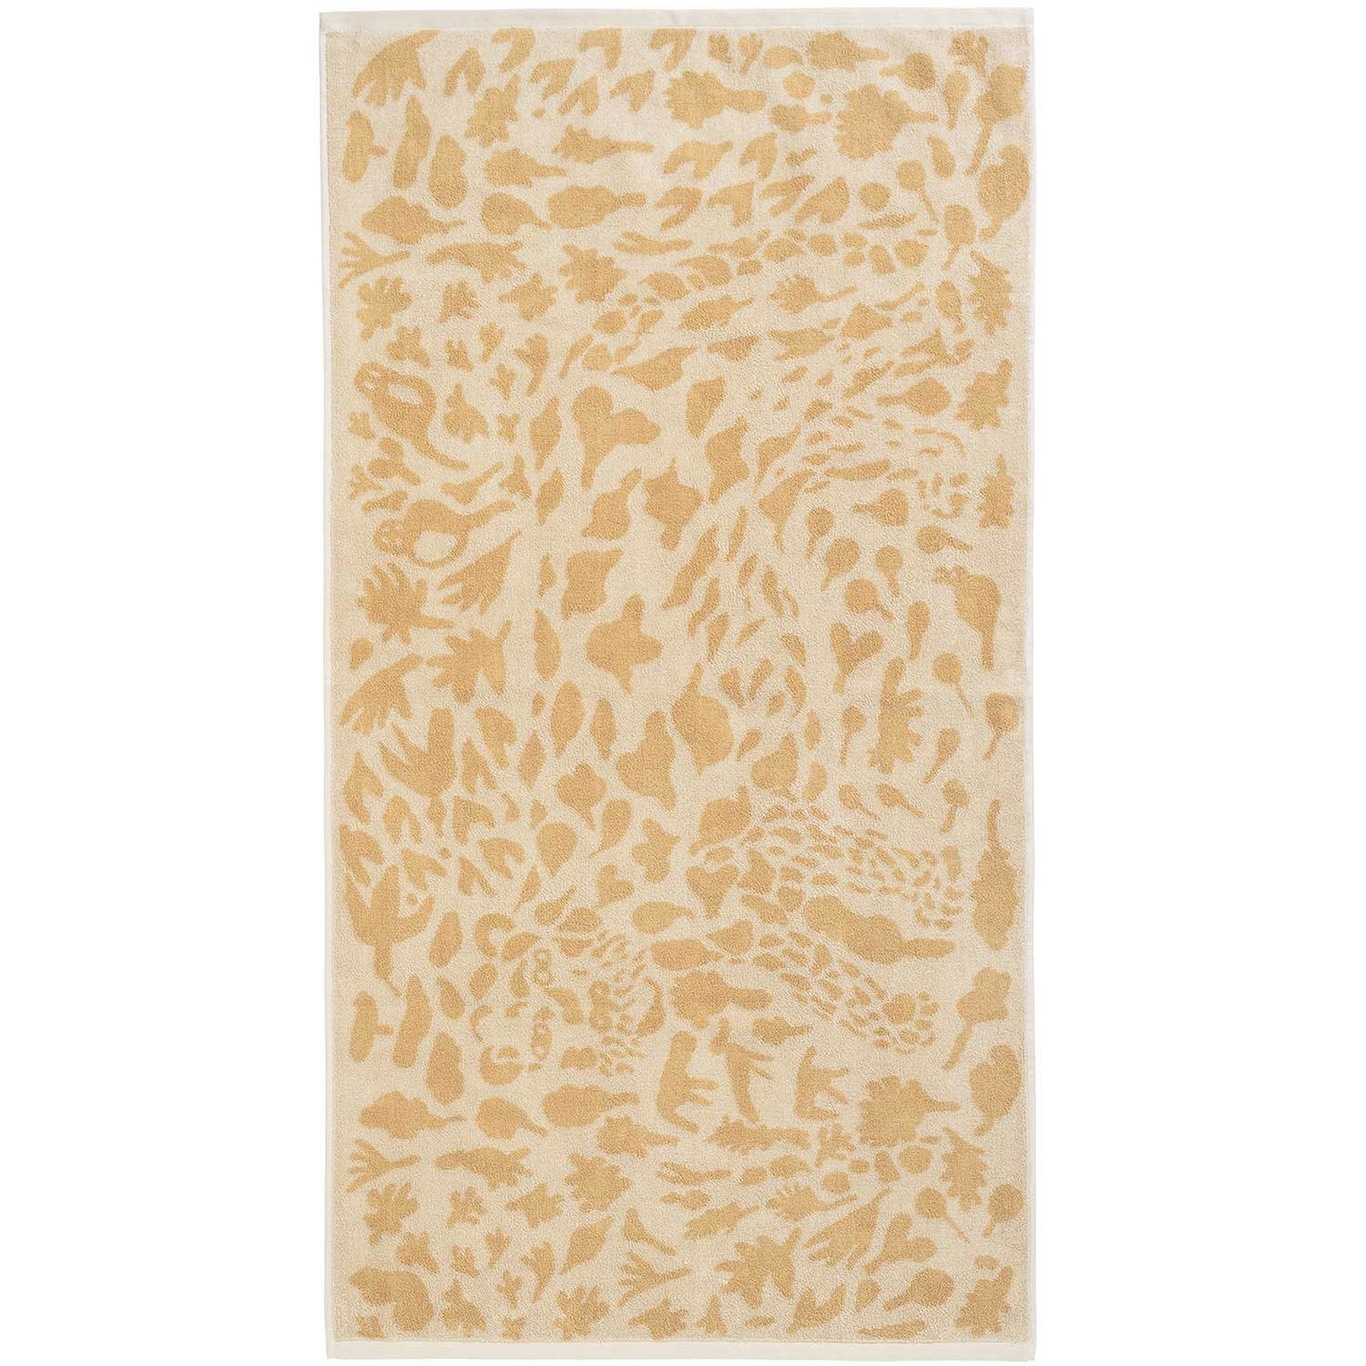 Oiva Toikka Collection Håndklæde, 70x140 cm, Cheetah Brown